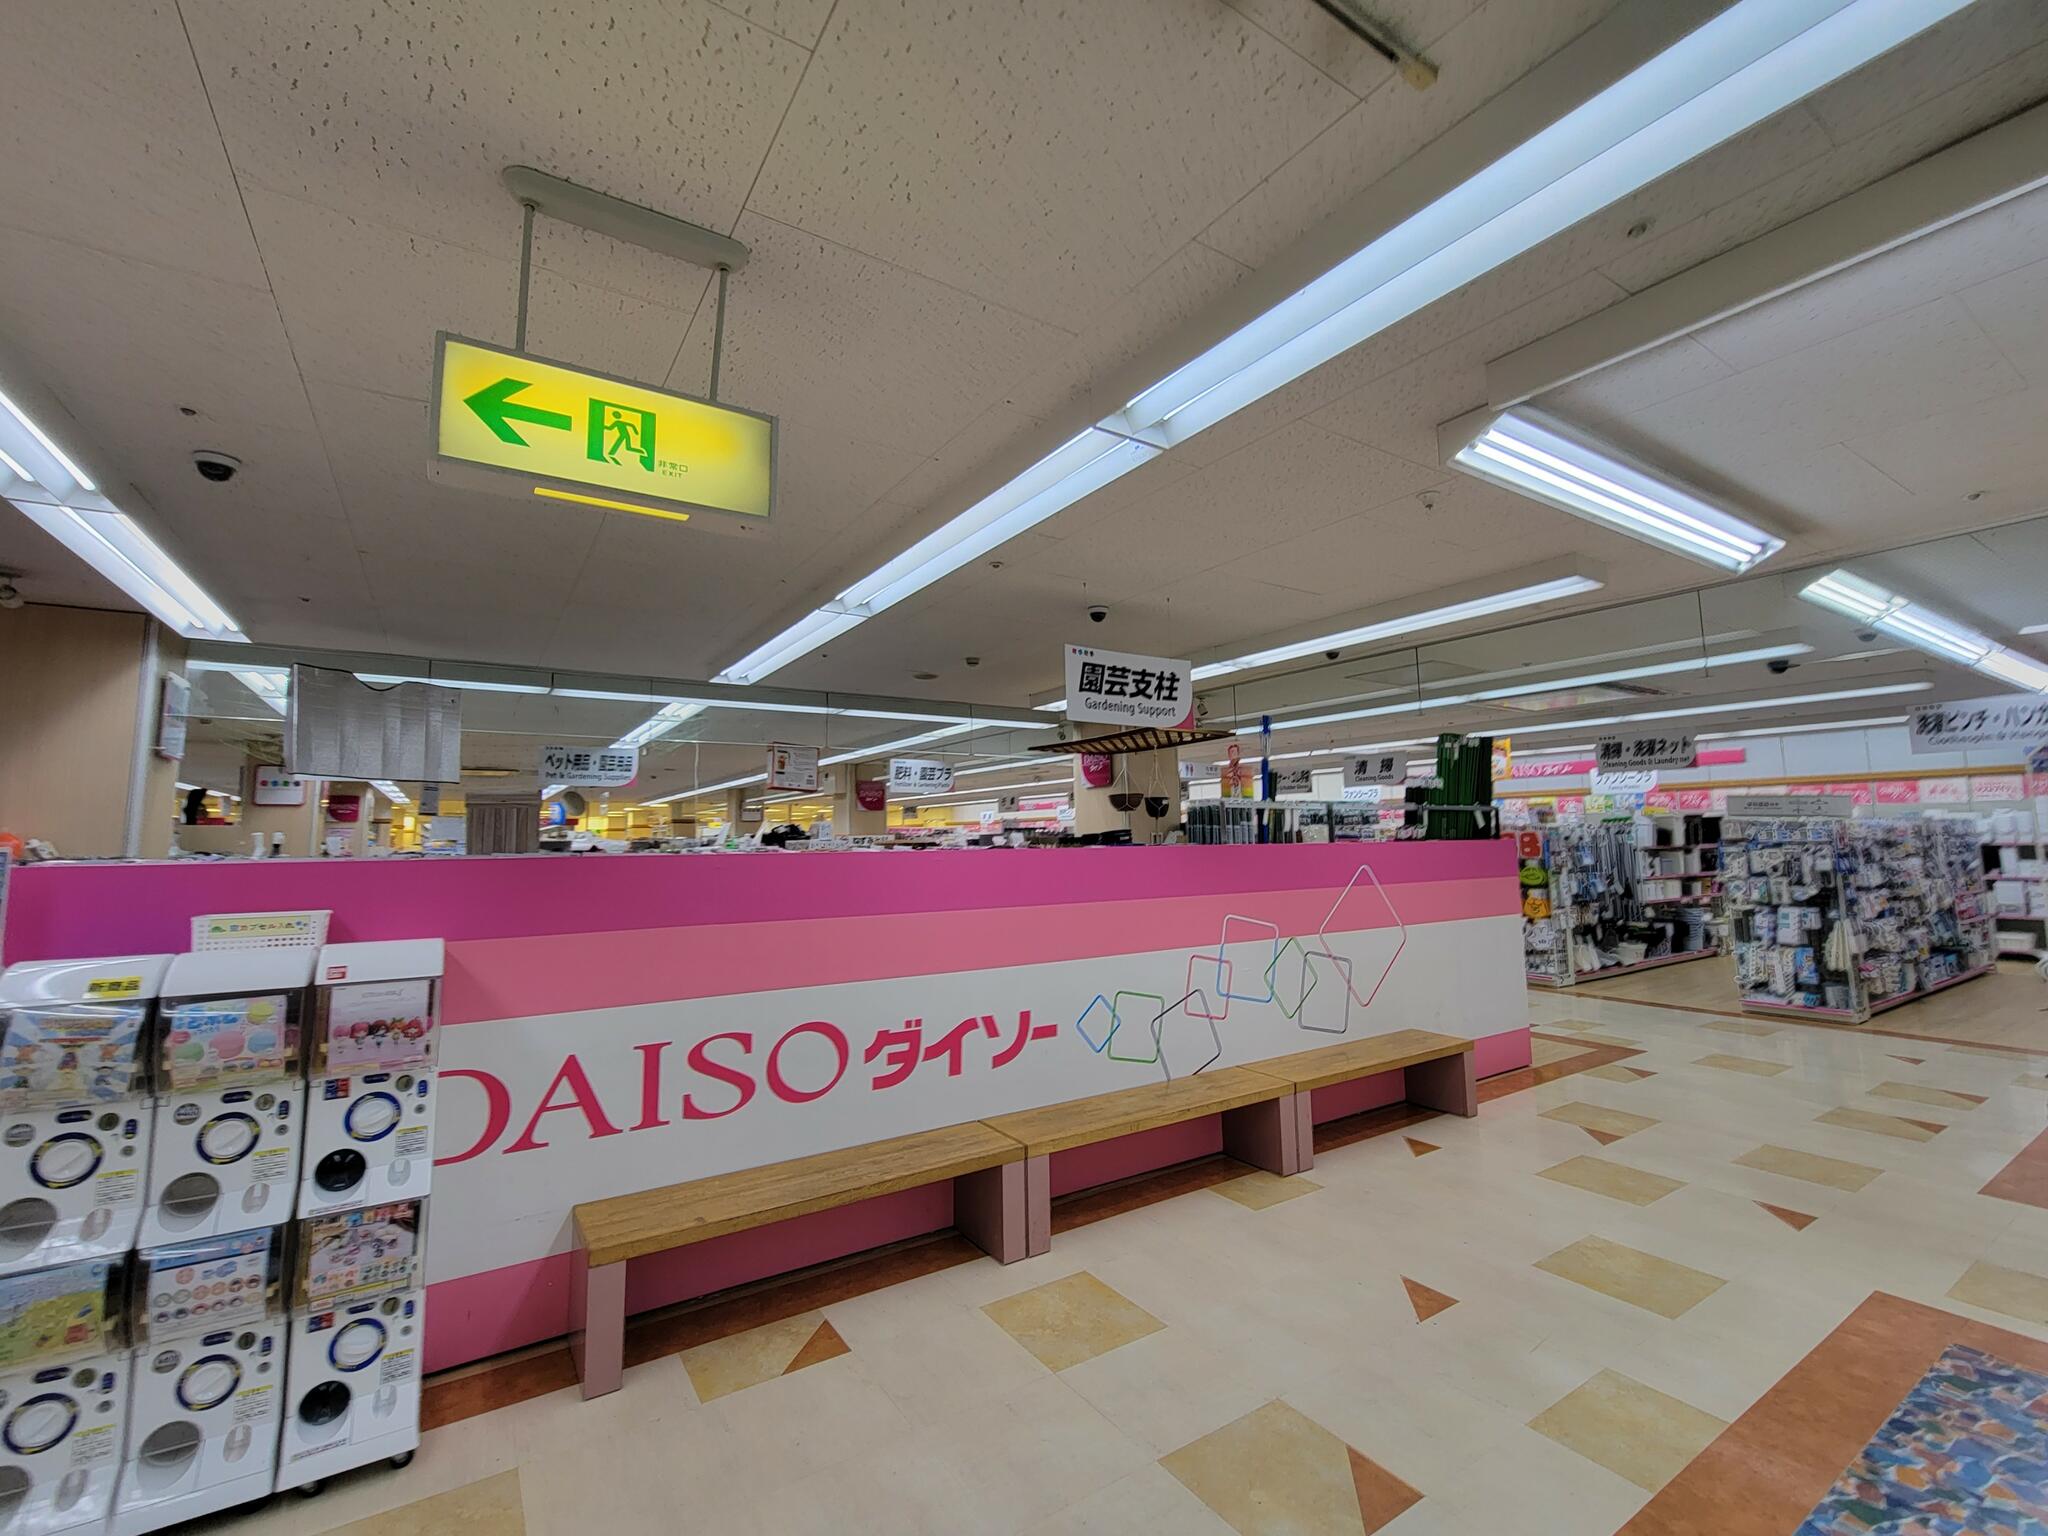 DAISO 雲南マルシェリーズ店の代表写真2